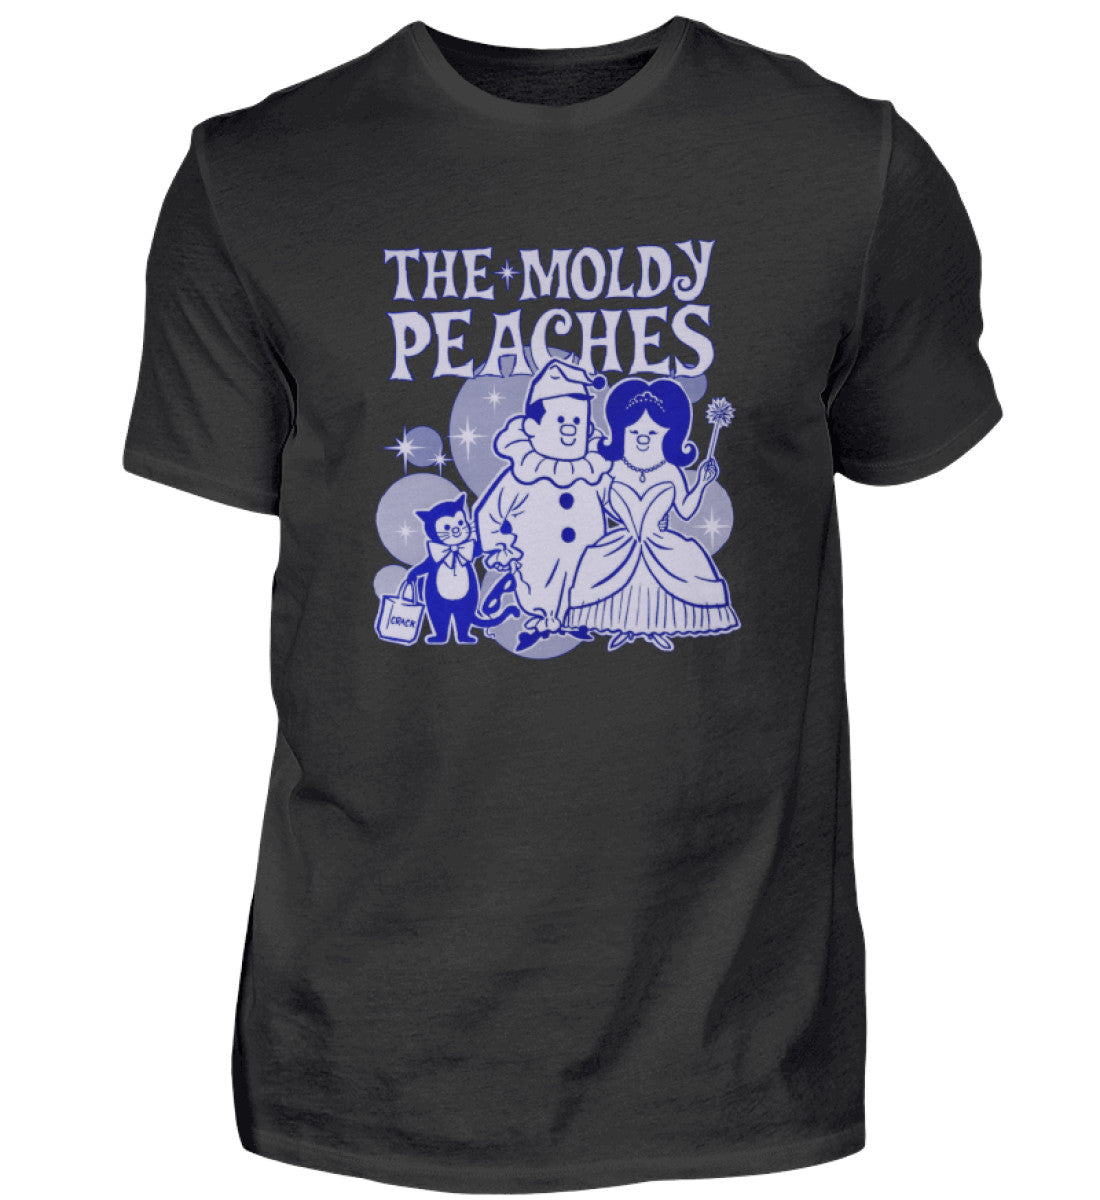 The Moldy Peaches T-Shirt Men